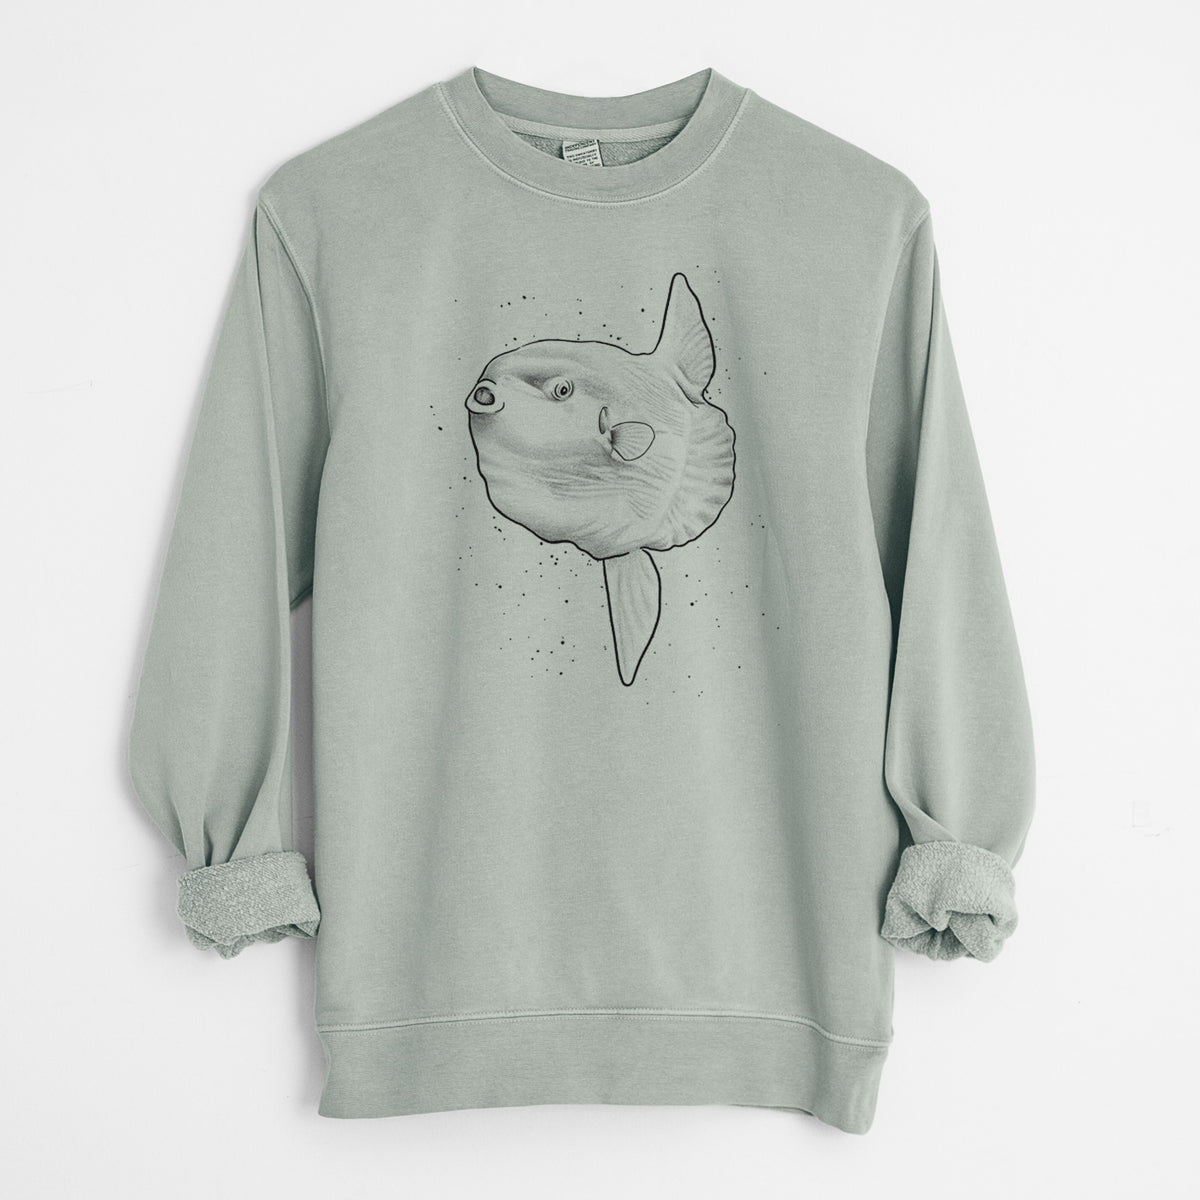 Ocean Sunfish - Mola mola - Unisex Pigment Dyed Crew Sweatshirt